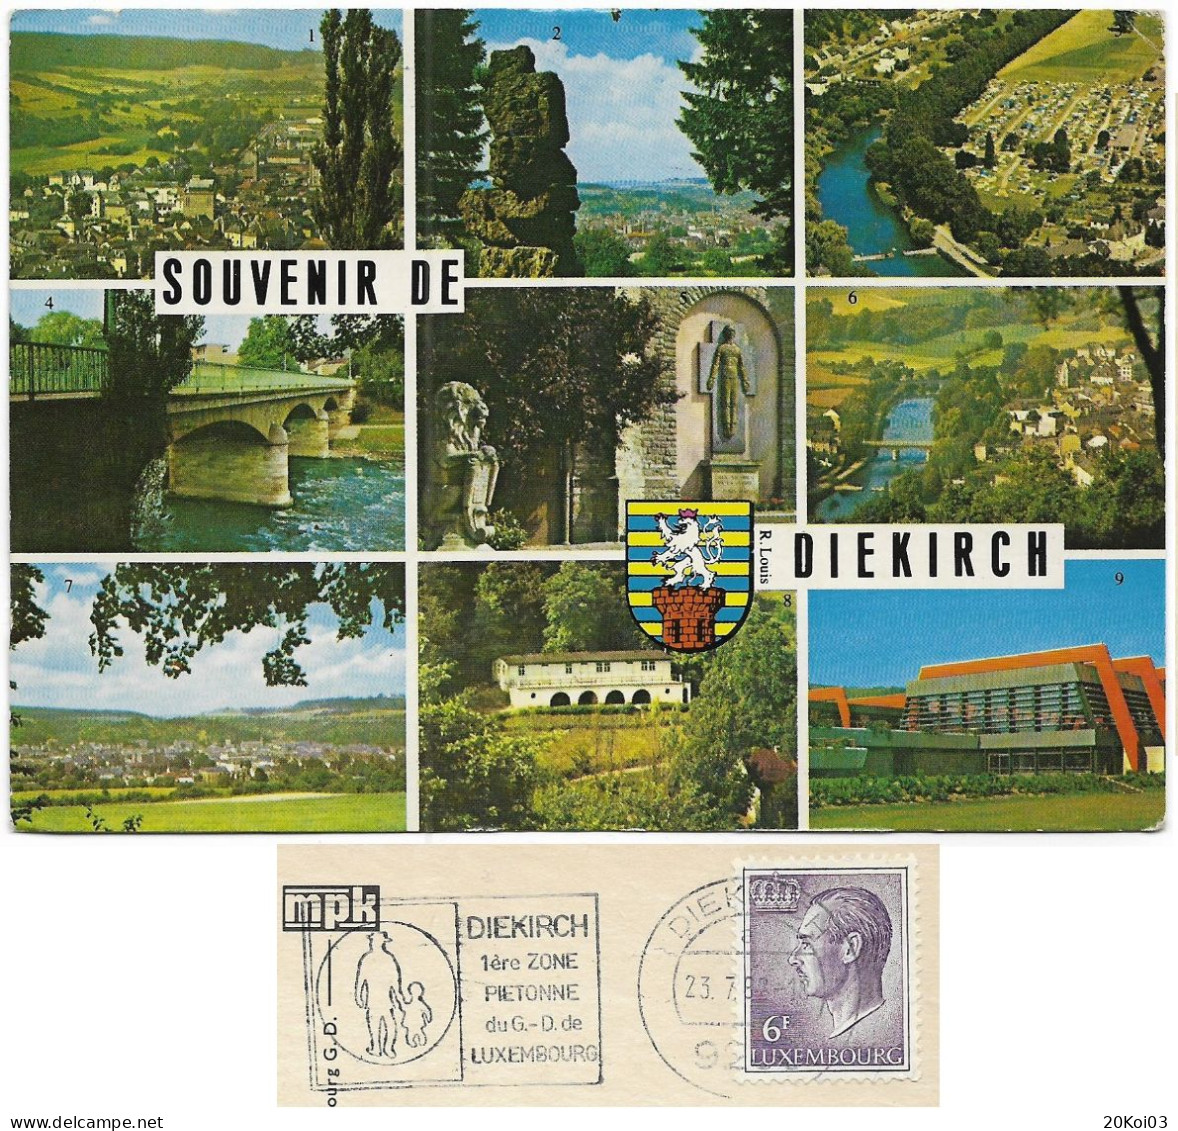 Souvenir De Diekirch 1982 Le Grand-Duché De Luxembourg _R Louis_1 ére Zone Pietonne Du G-D_mpk No 820 Paul KRAUS_TTB - Diekirch